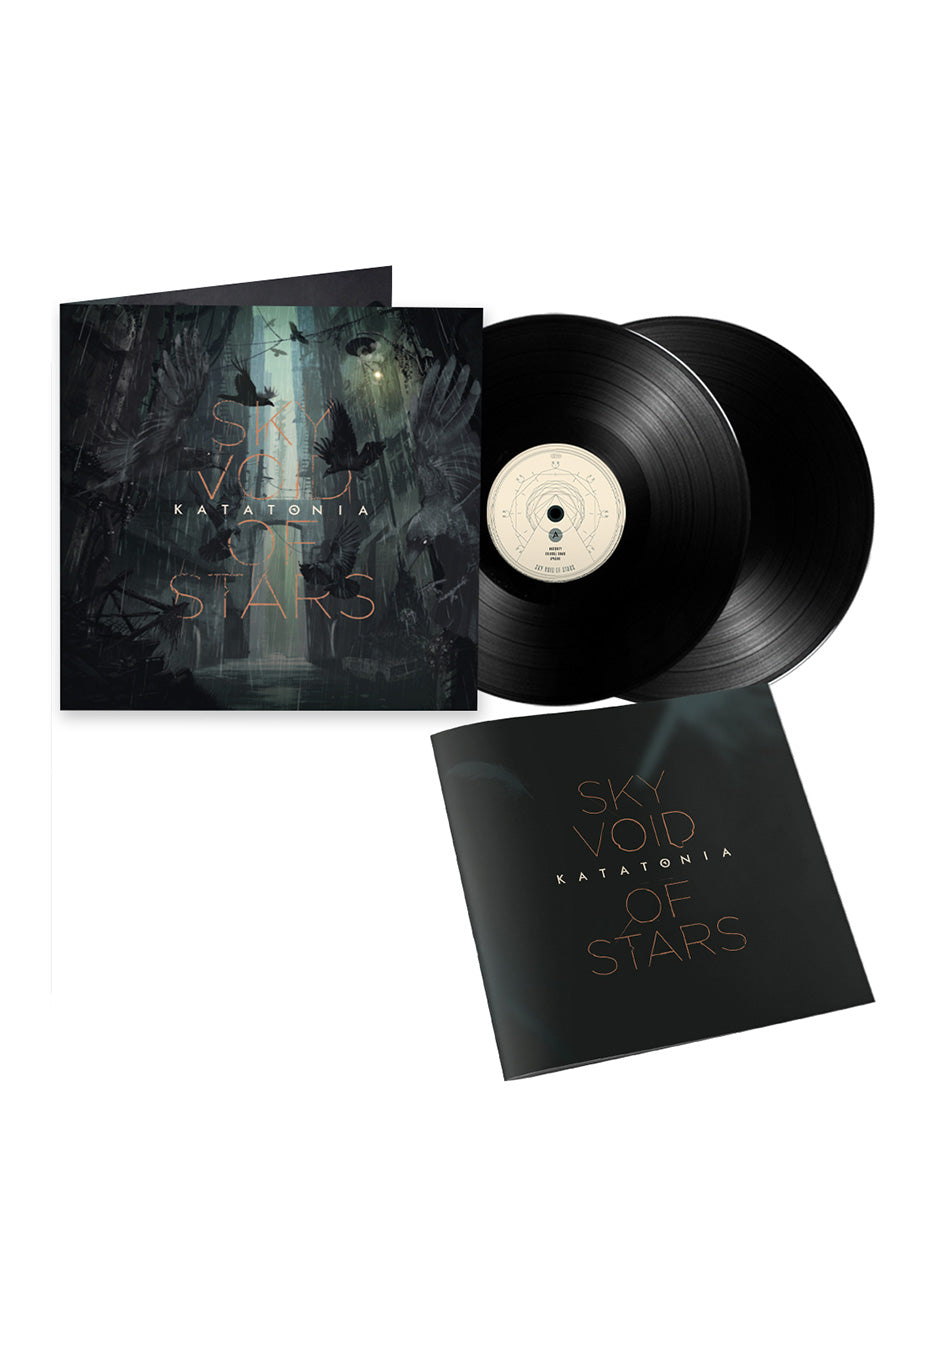 Katatonia - Sky Void Of Stars - 2 Vinyl